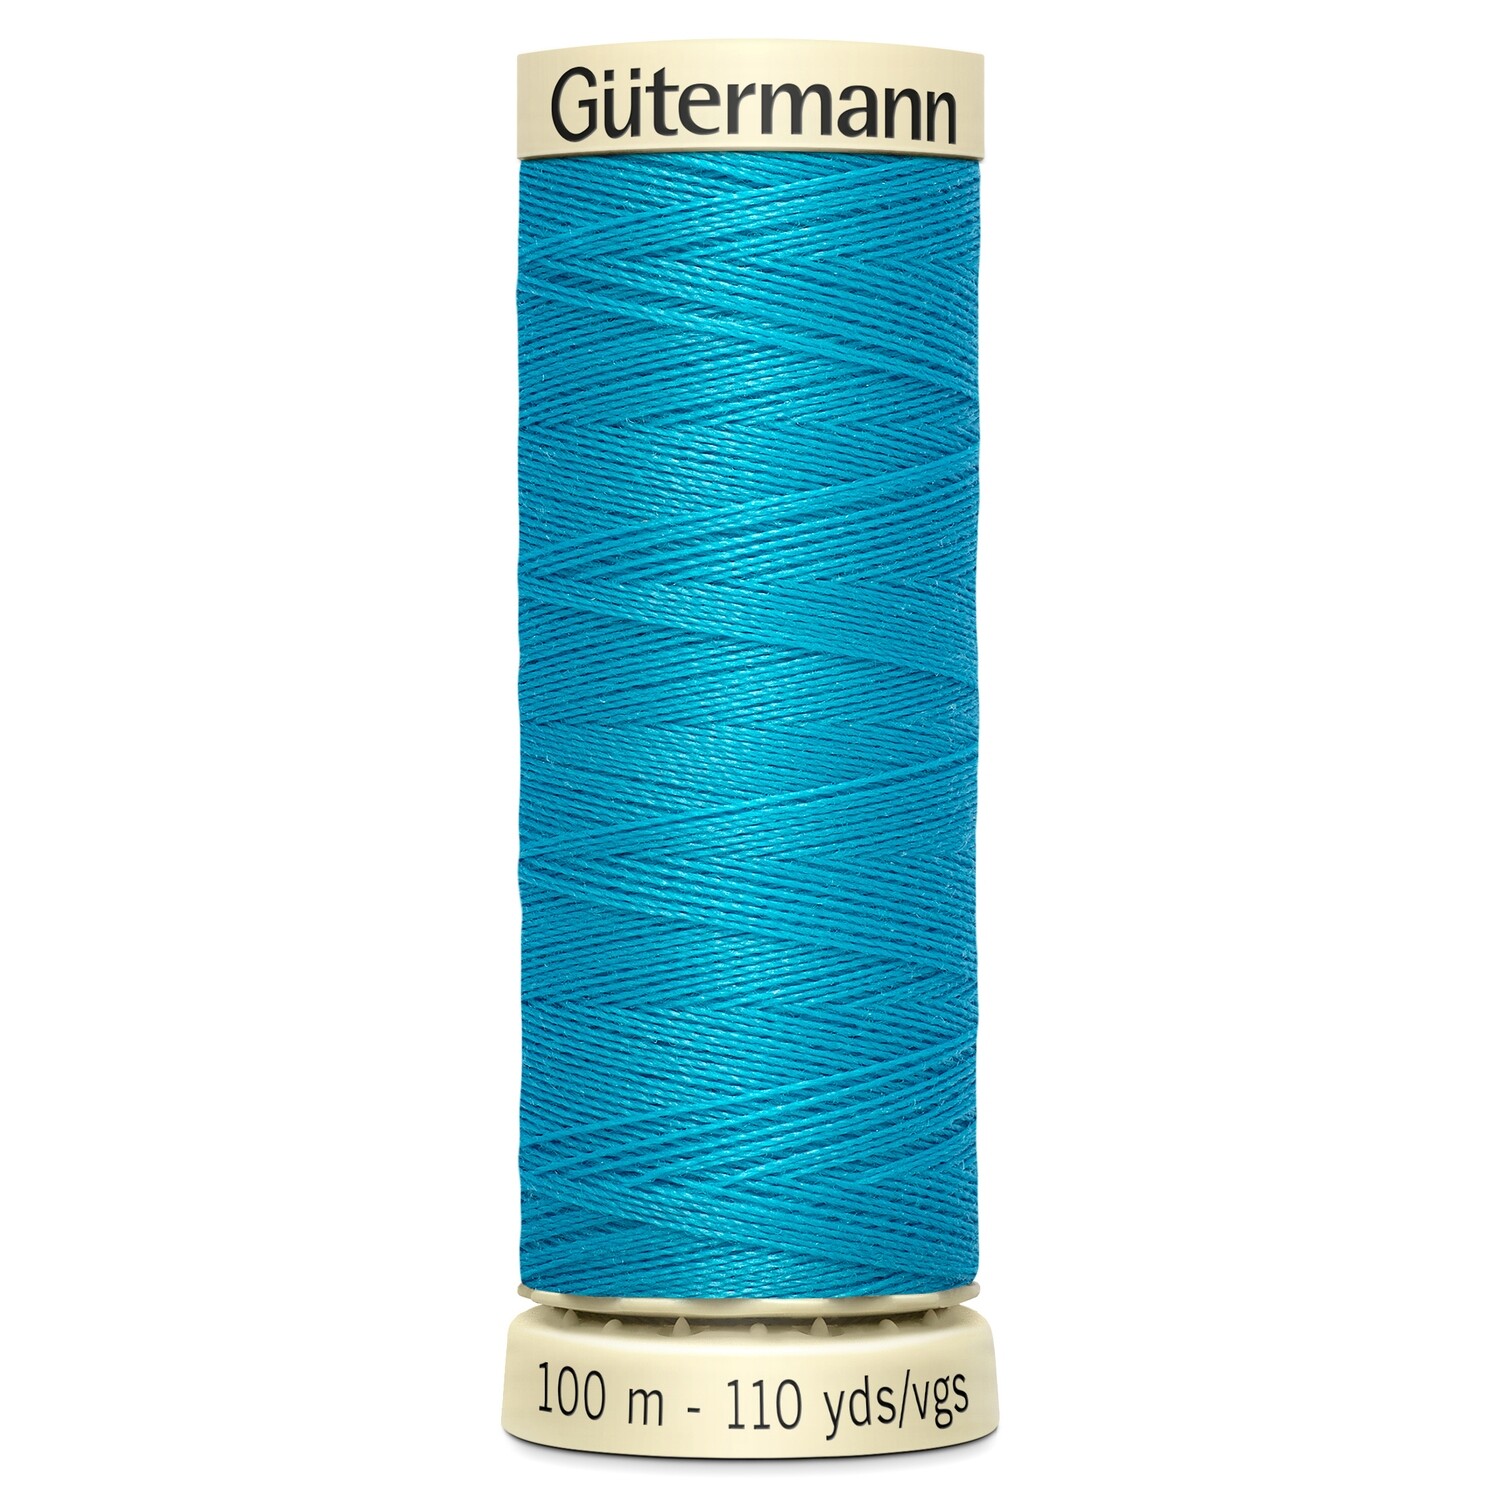 Gutermann Sew-All thread 736